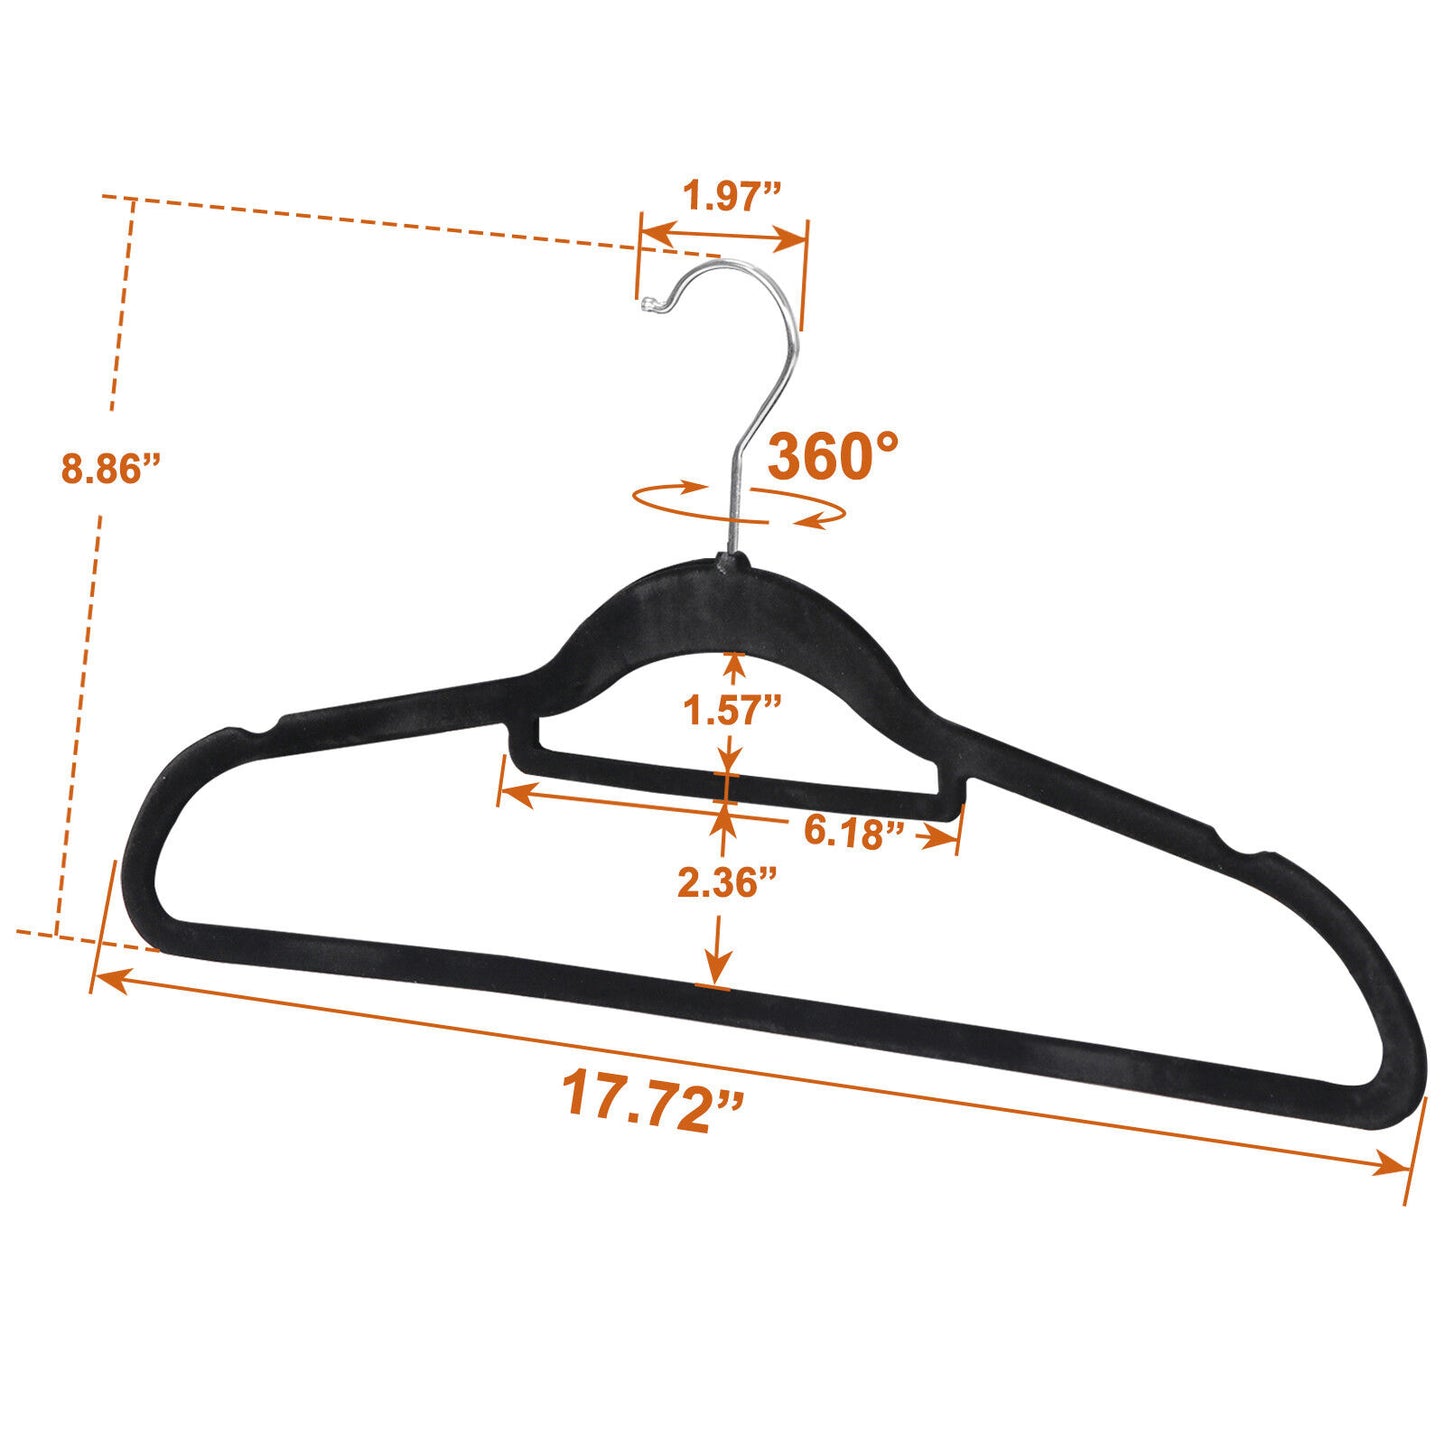 100PCS Non-Slip Velvet Hangers Premium  Flocked Clothes Hangers 360° Rotatable